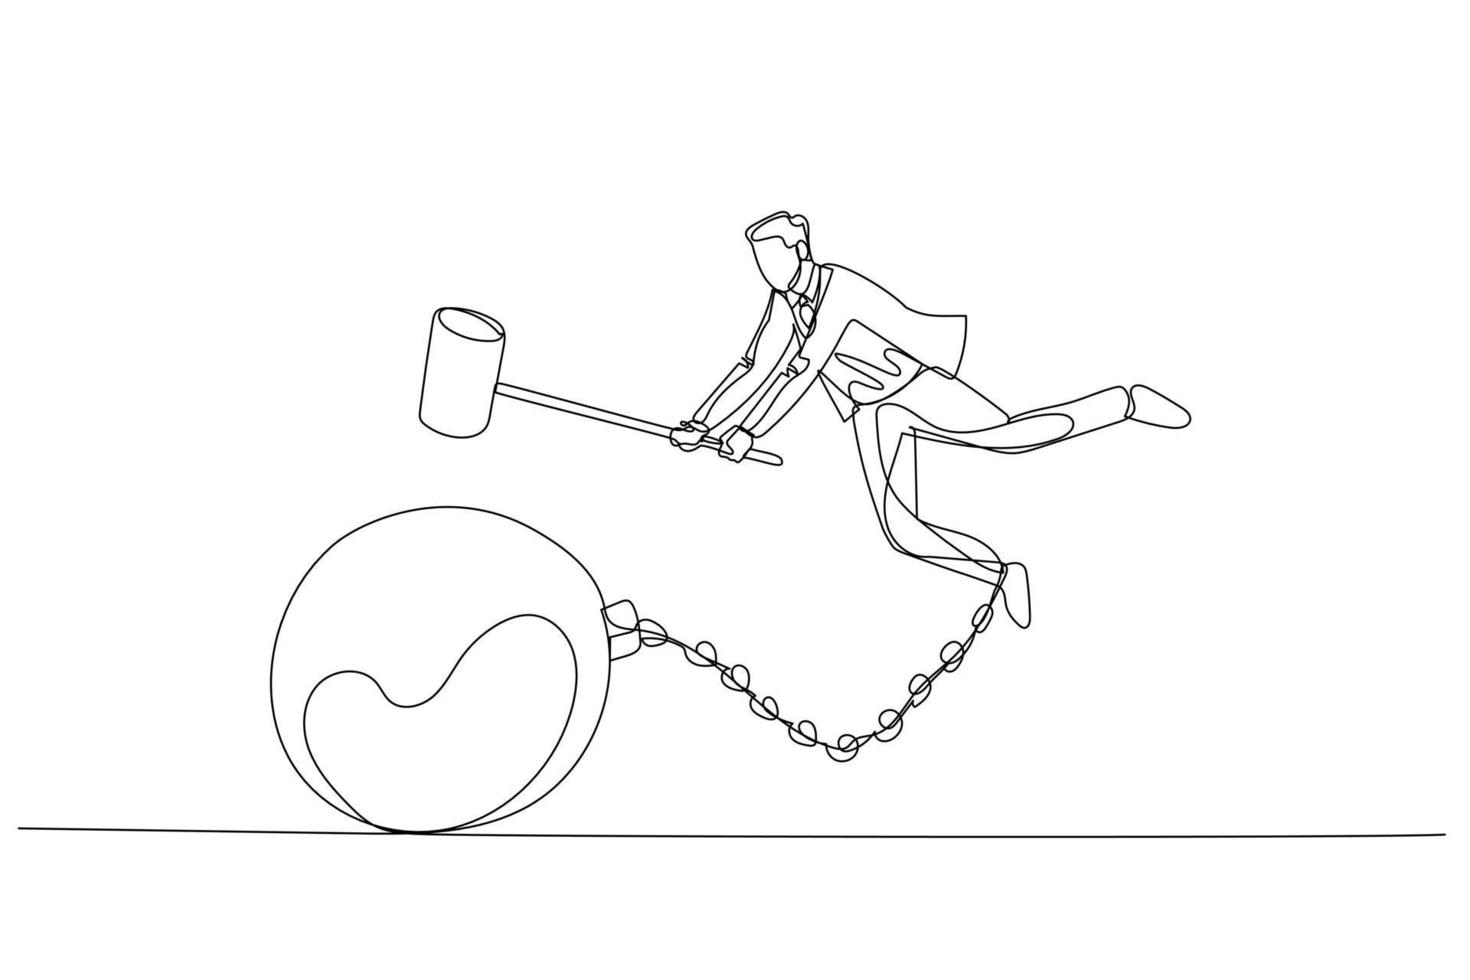 ilustración de empresario aplastar cadena acero pelota con martillo. concepto de descanso gratis. soltero línea Arte estilo vector